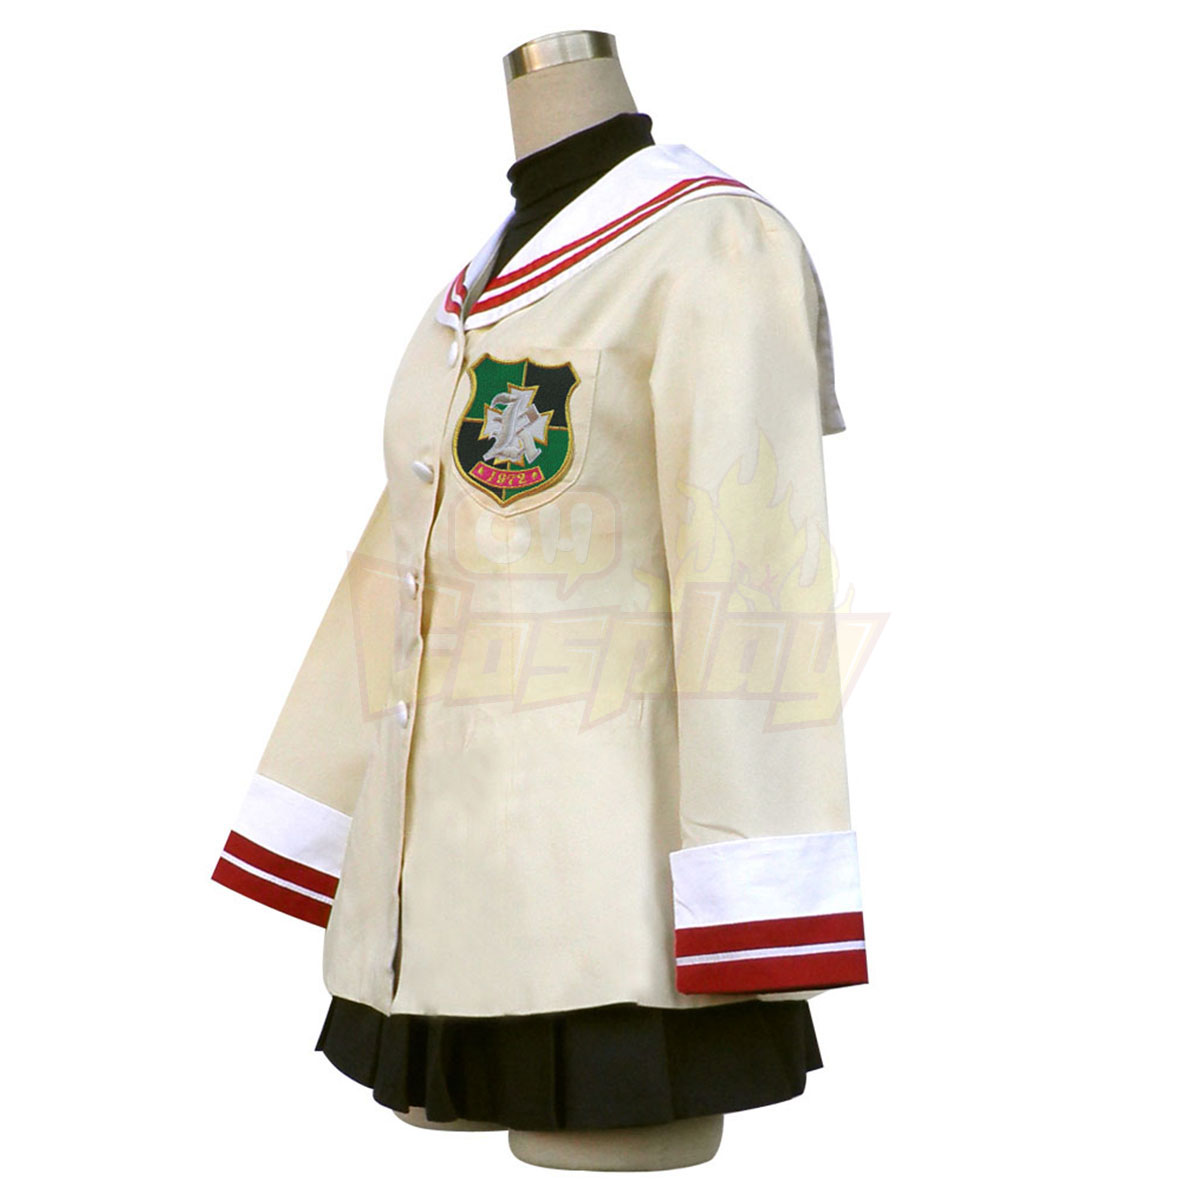 Deluxe Clannad Ibuki Fūko 1ST High School Female Winter Uniform Green Badge Costumes